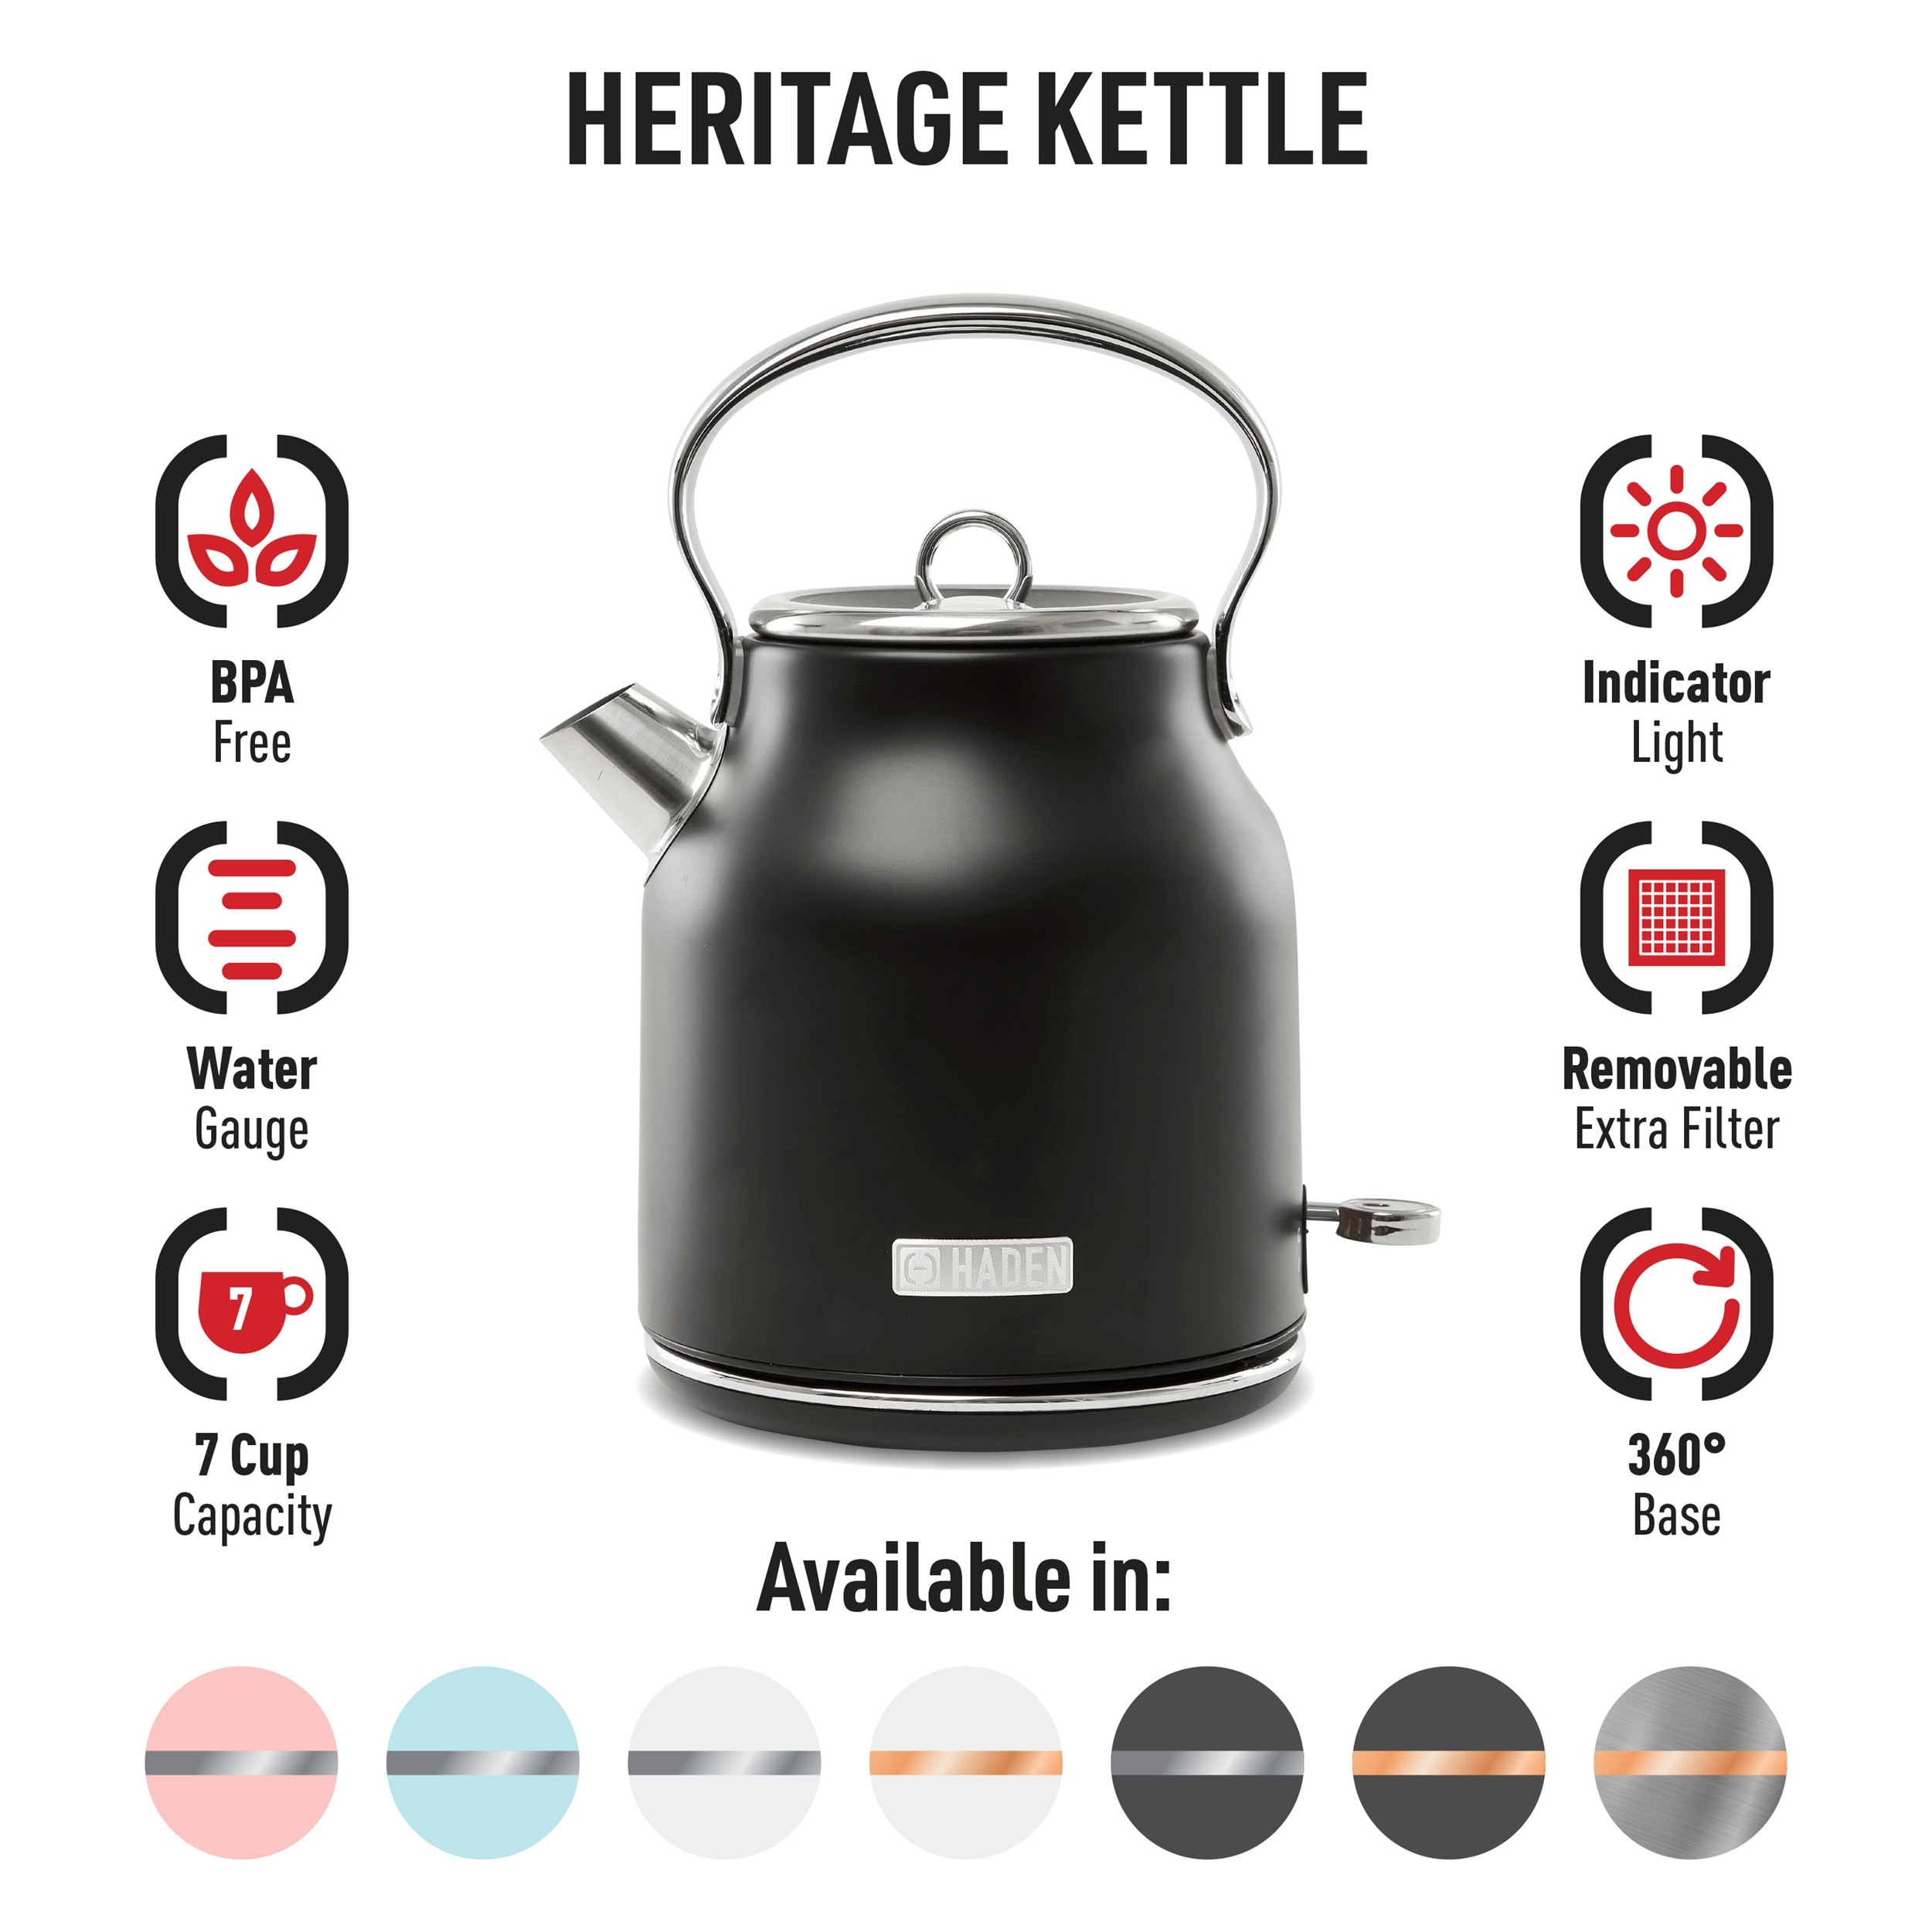 Haden Heritage 1.7 Liter Stainless Steel Electric Tea Kettle - Bed Bath &  Beyond - 29613383